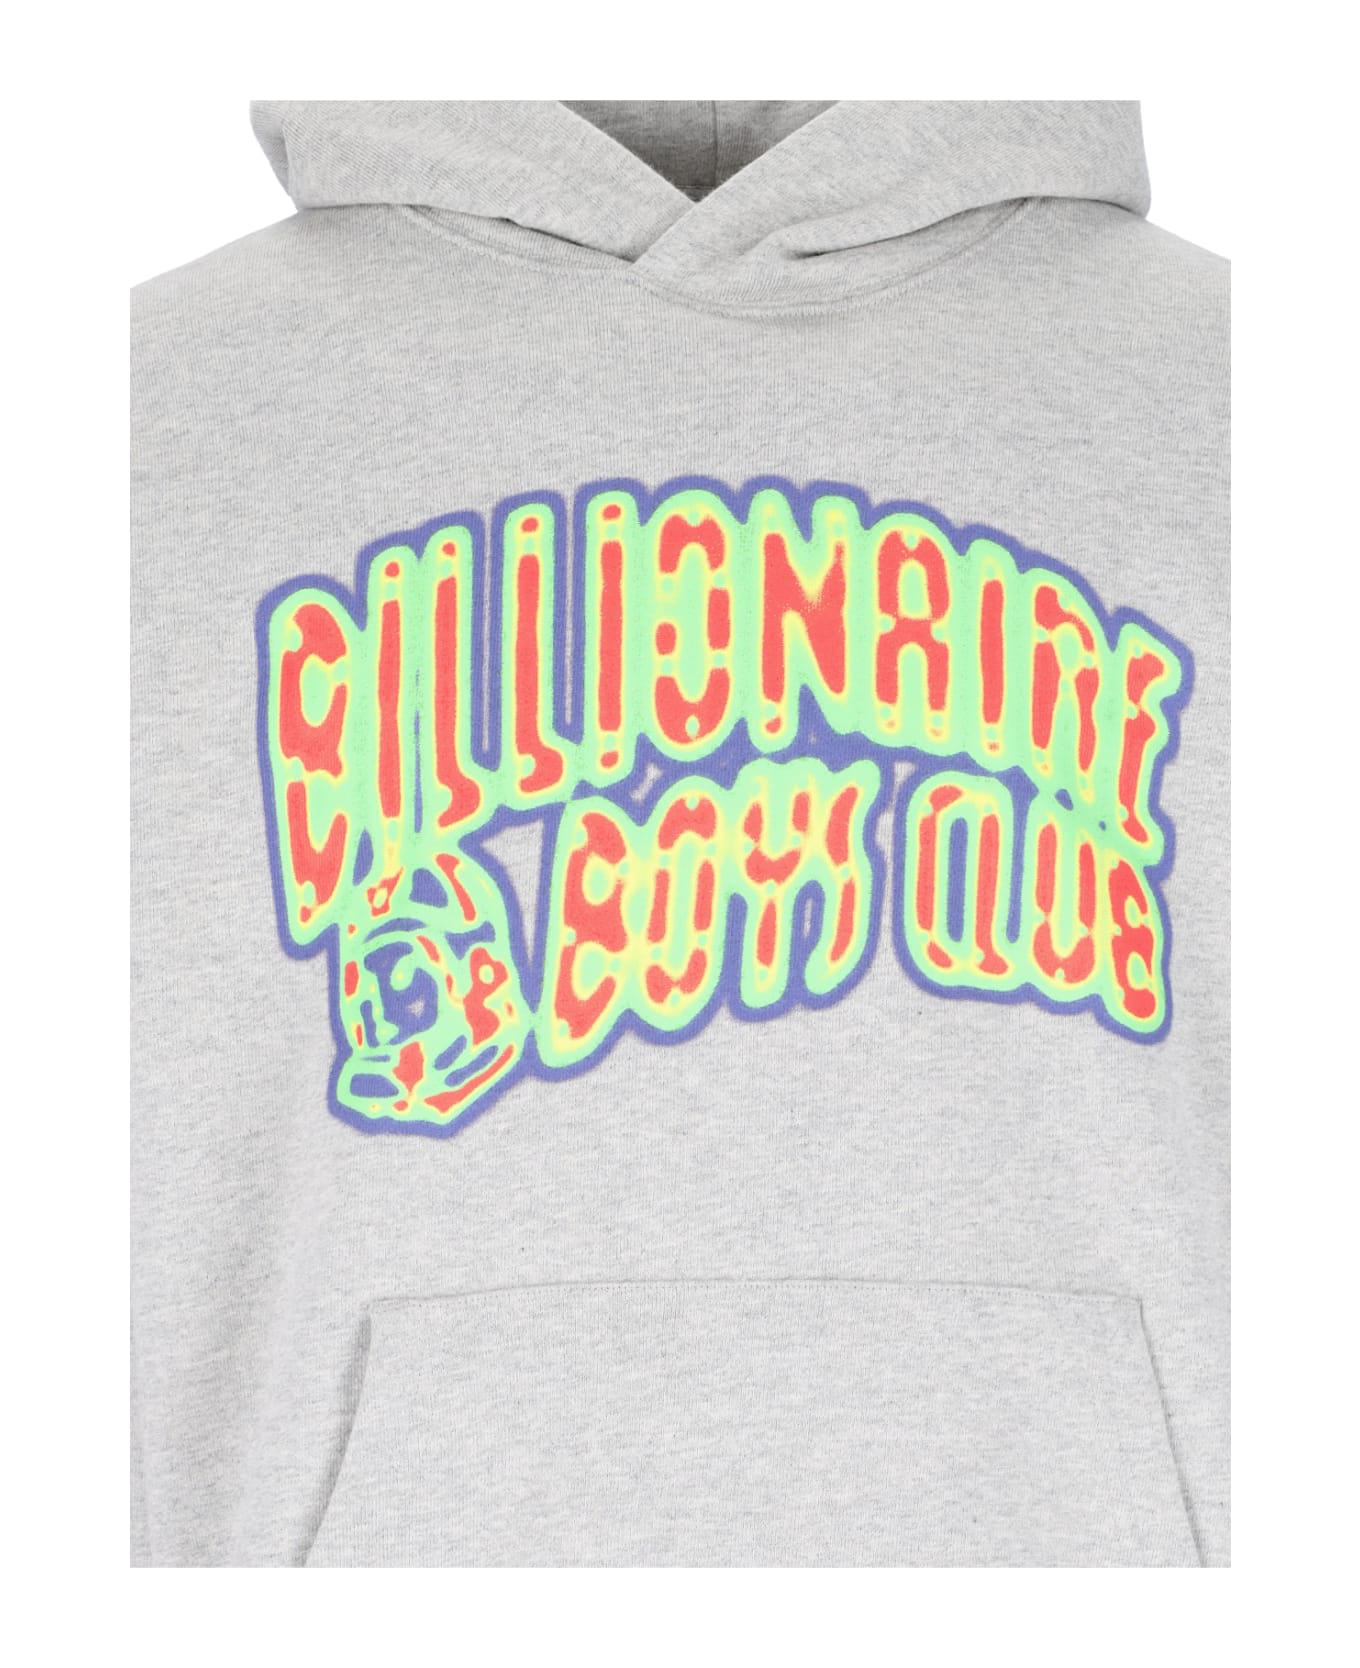 Billionaire Boys Club Sweater - Grey